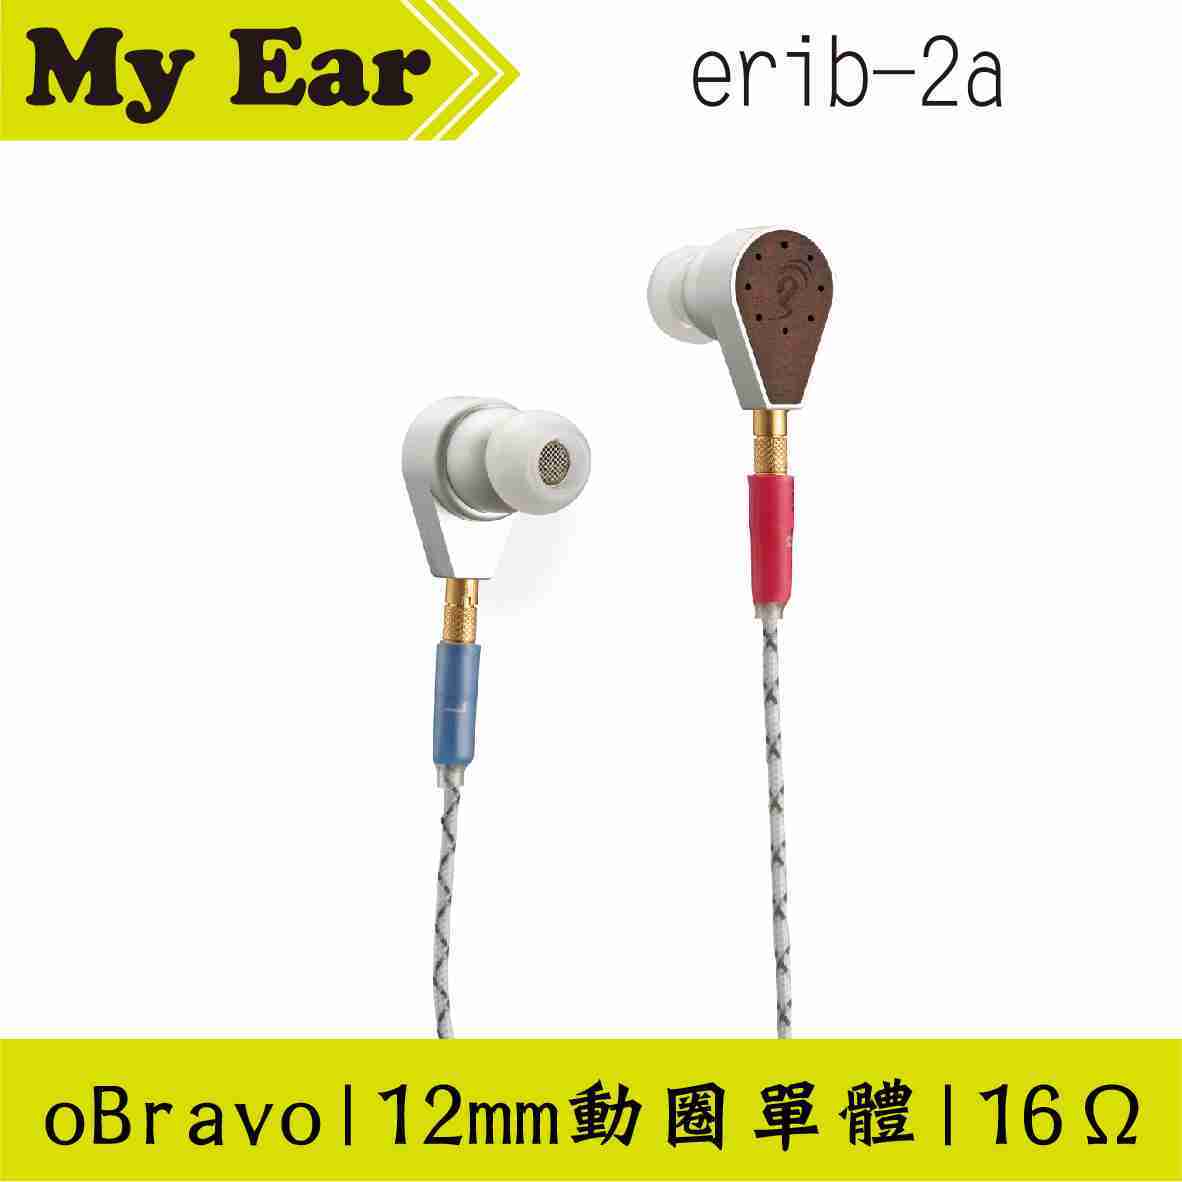 oBravo erib-2a 耳道式耳機 平面振膜 | My Ear耳機專門店